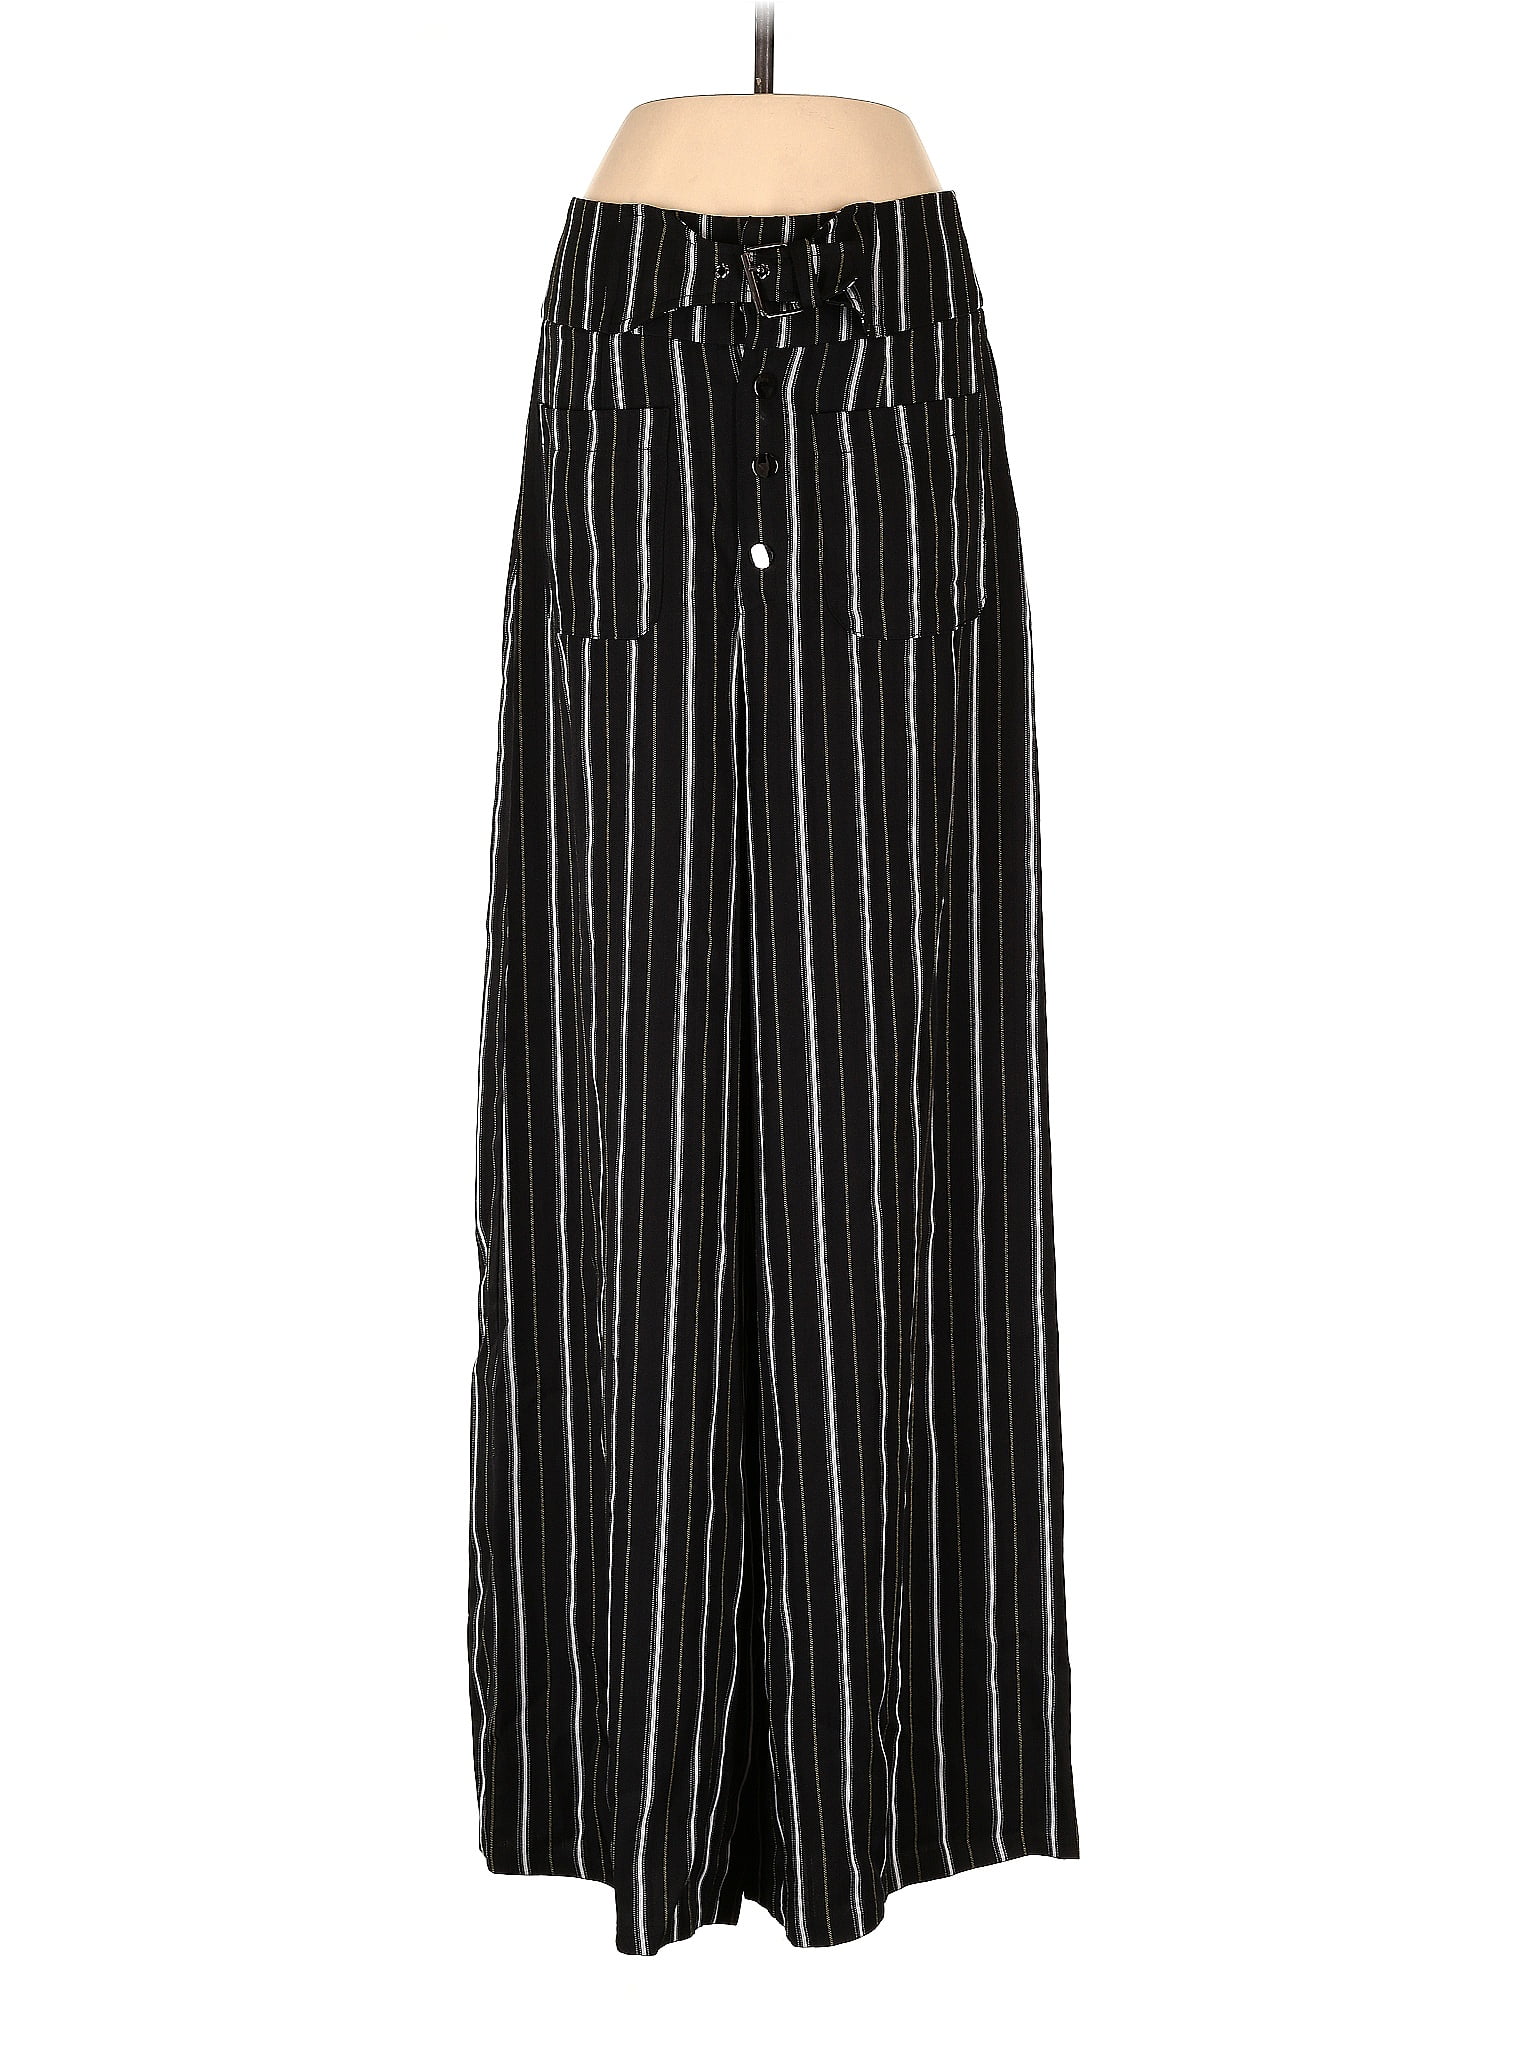 Gracia Stripes Black Casual Pants Size S - 77% off | thredUP